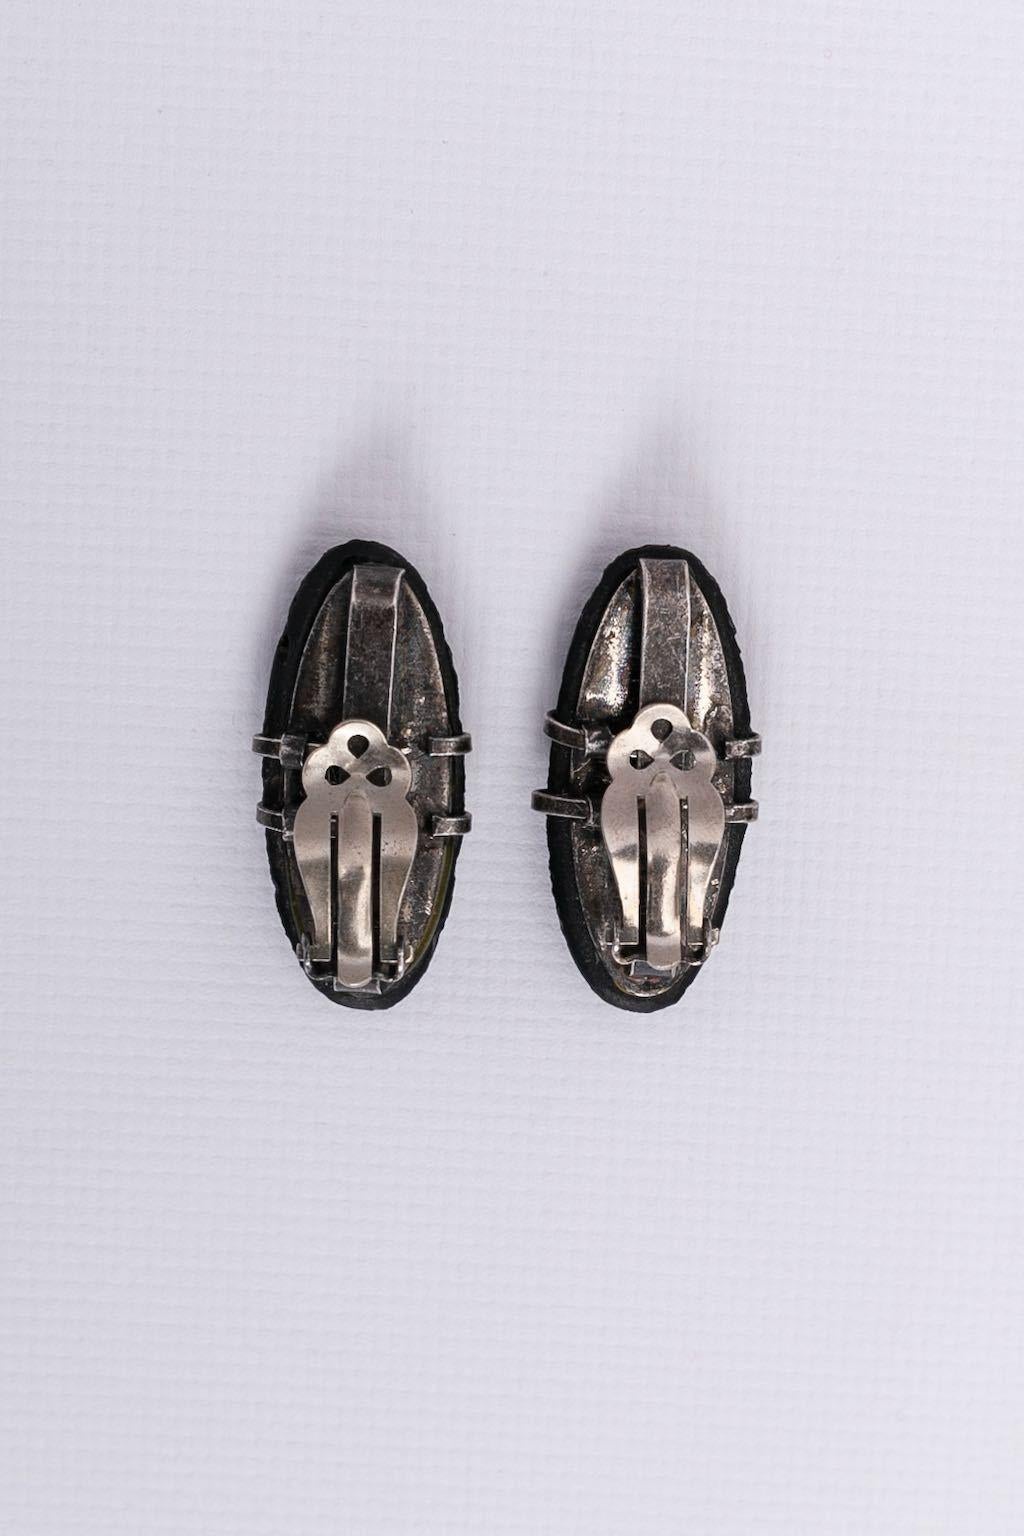 Yves Saint Laurent Blackened Metal Earrings In Excellent Condition For Sale In SAINT-OUEN-SUR-SEINE, FR